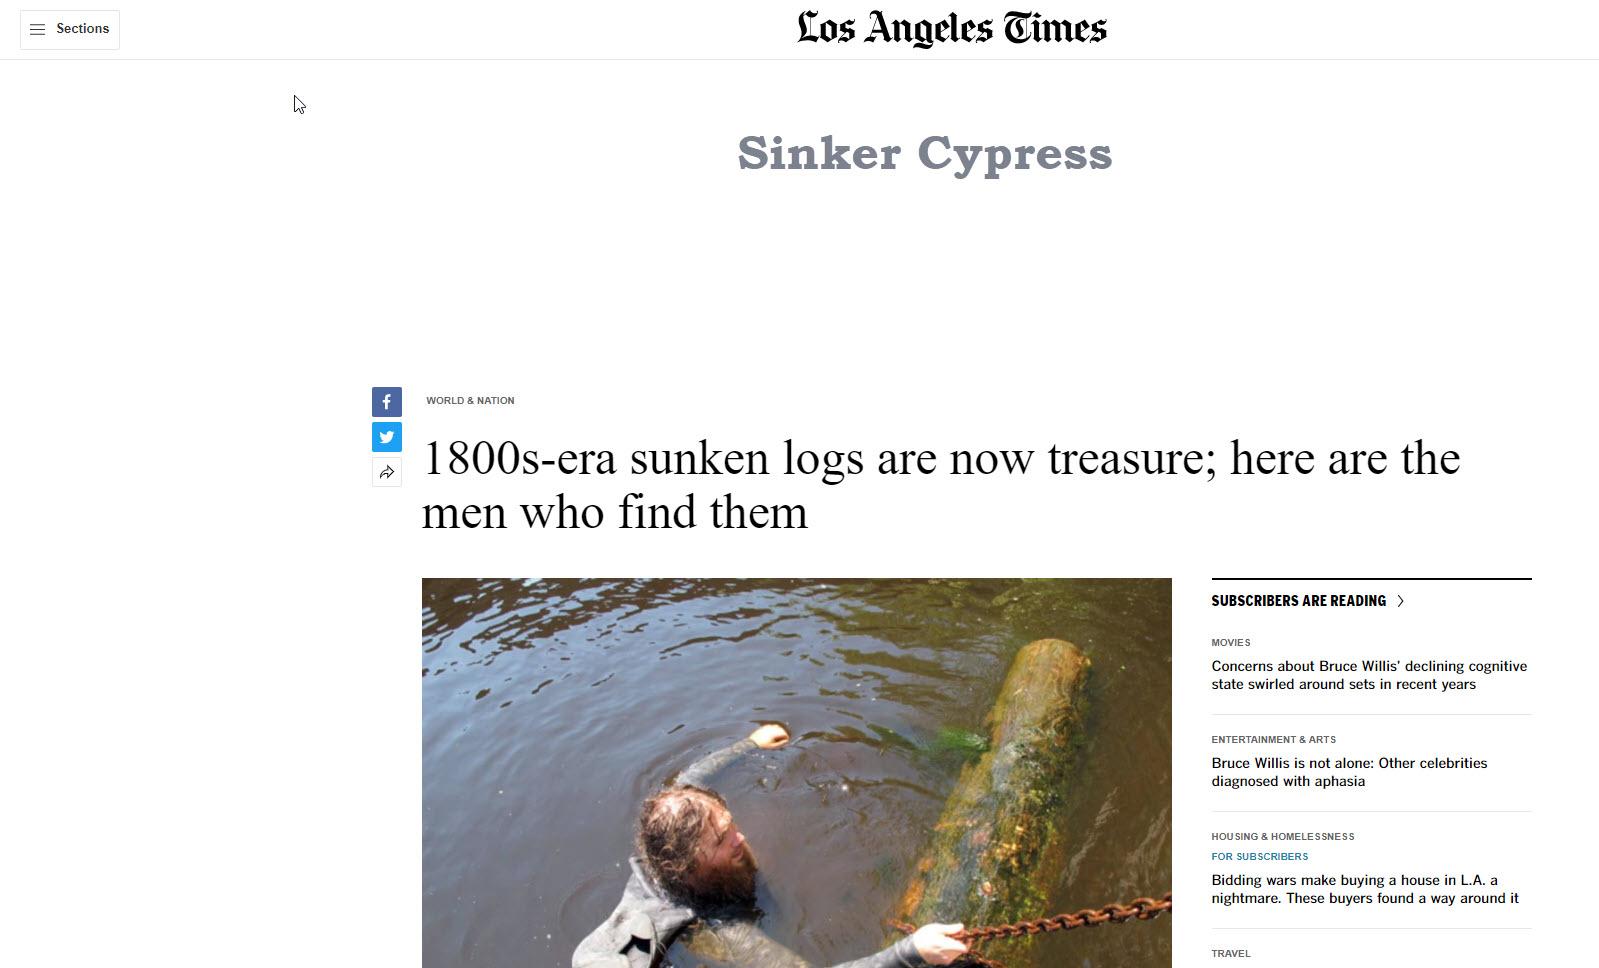 Sinker Cypress Los Angeles Times.jpg